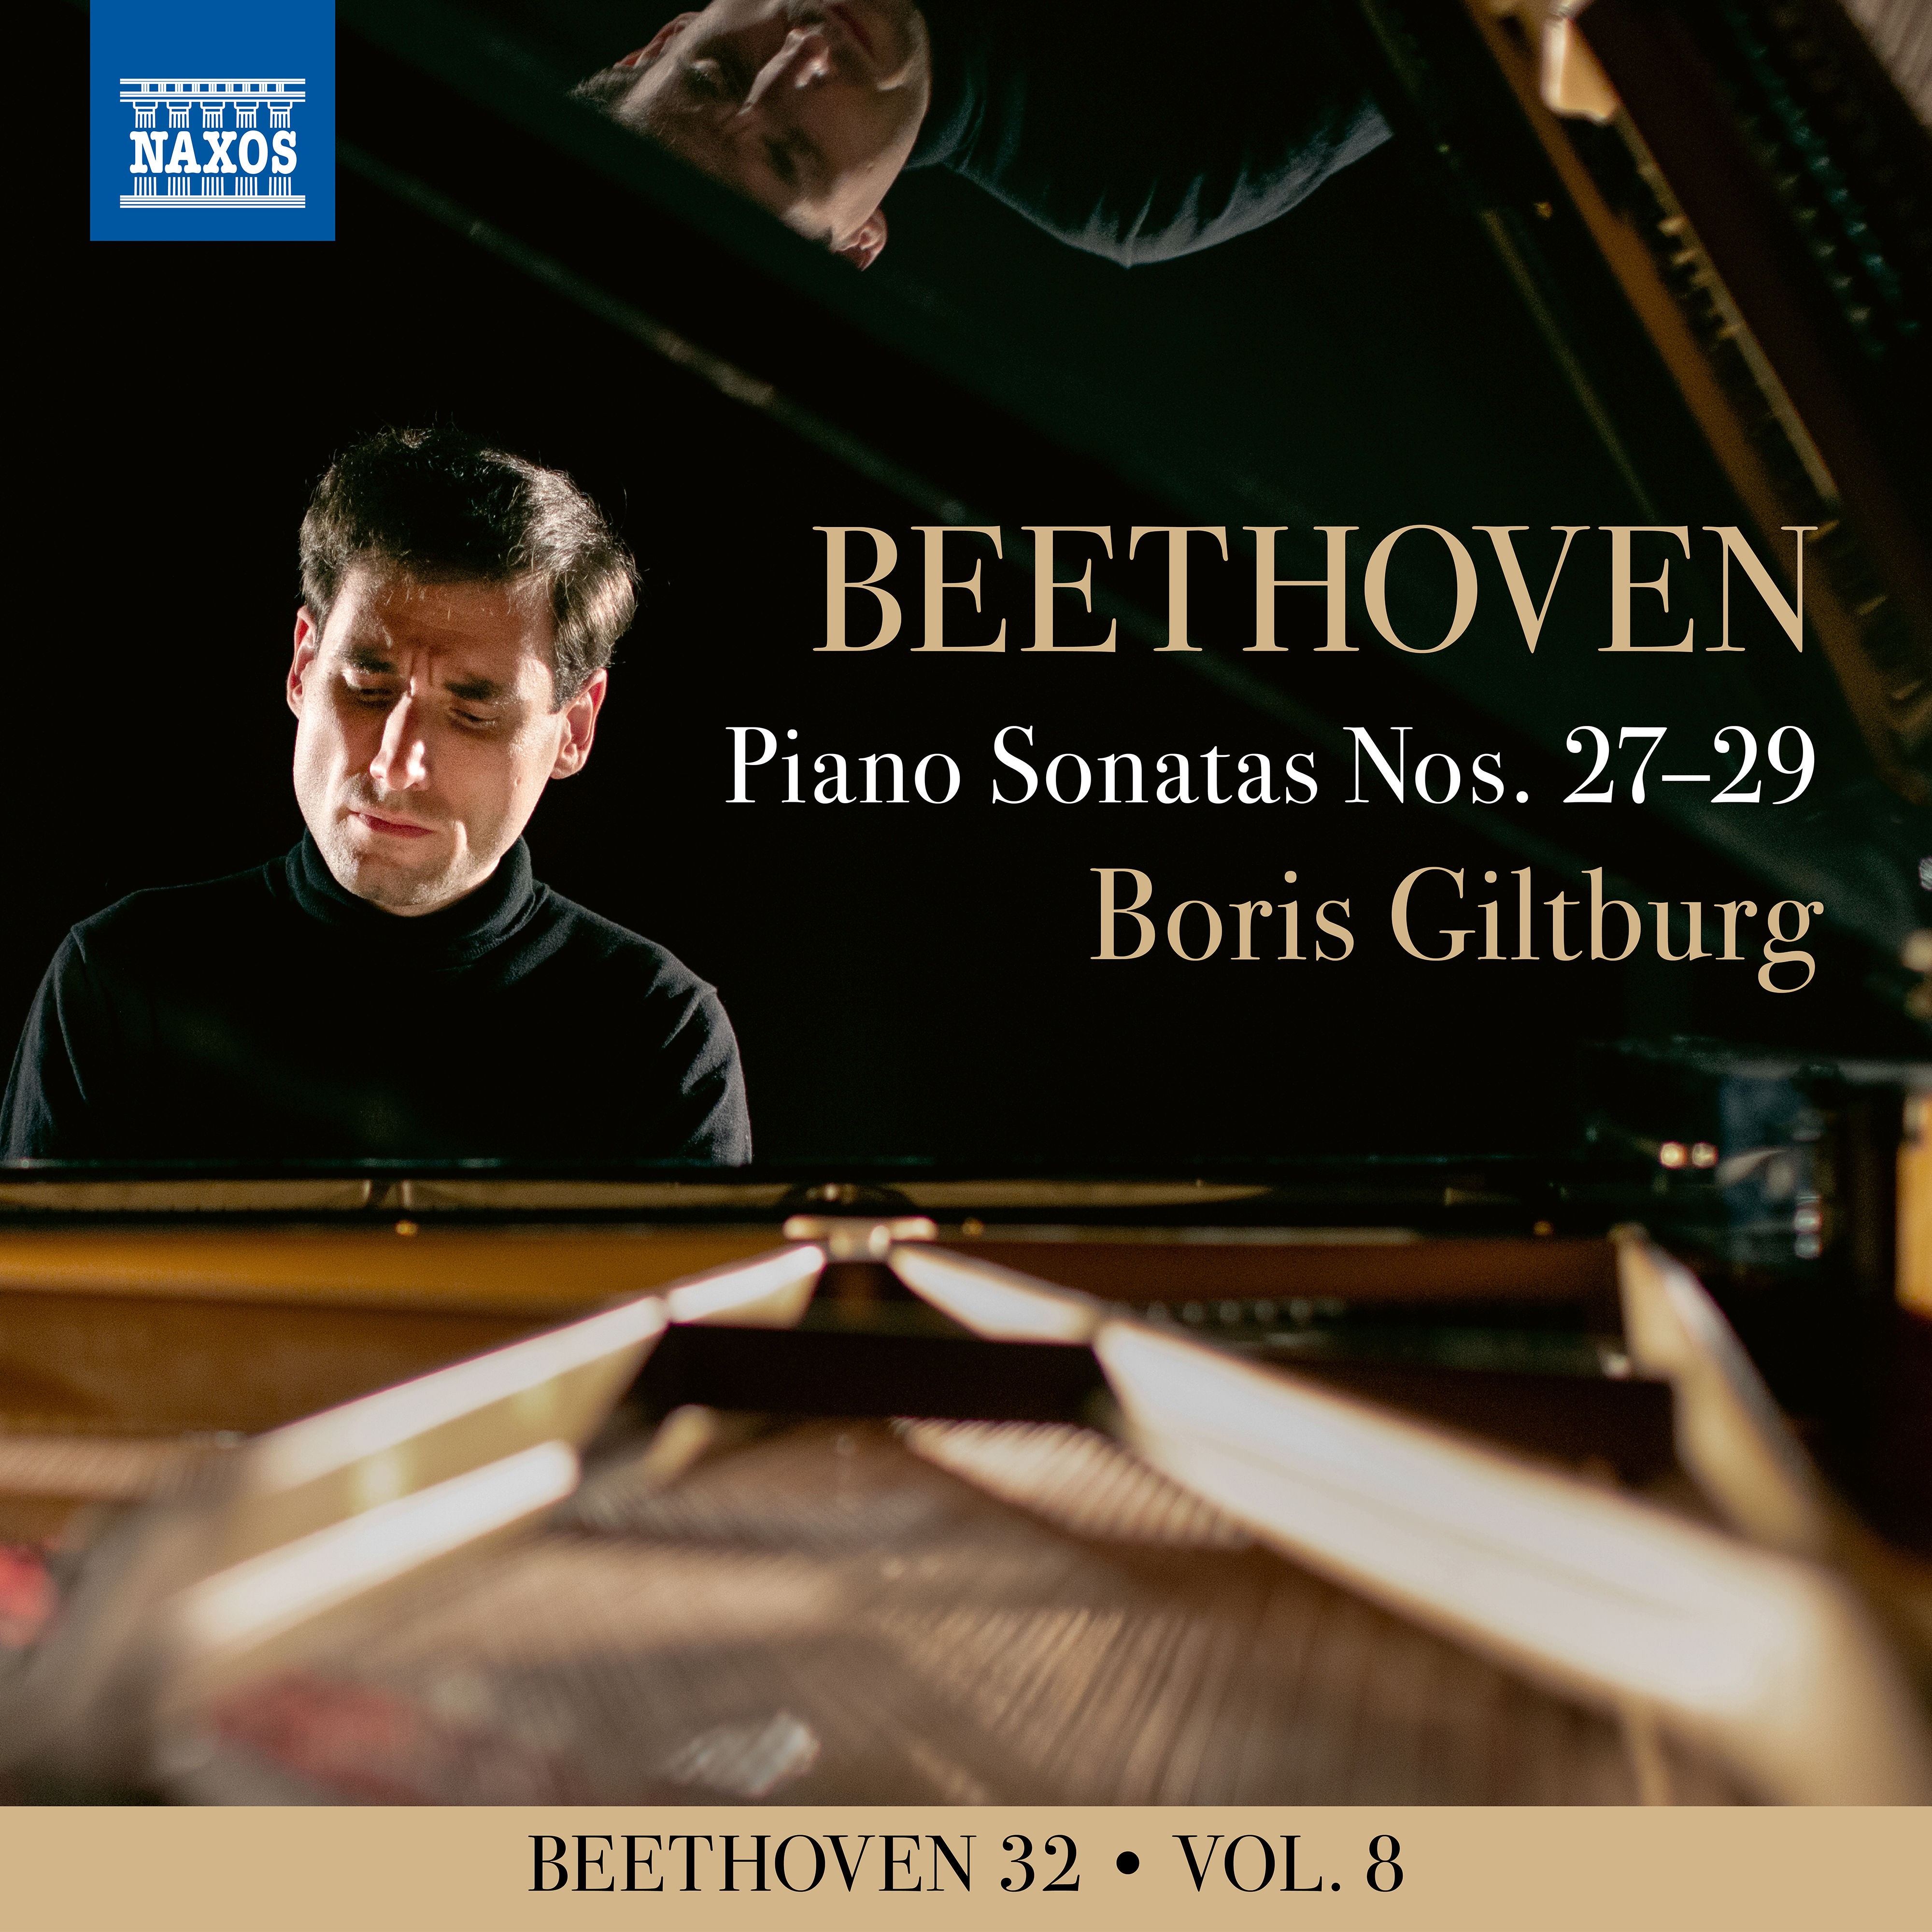 Boris Giltburg - Beethoven 32, Vol. 8 Piano Sonatas Nos. 27-29 (2021) [FLAC 24bit/96kHz]